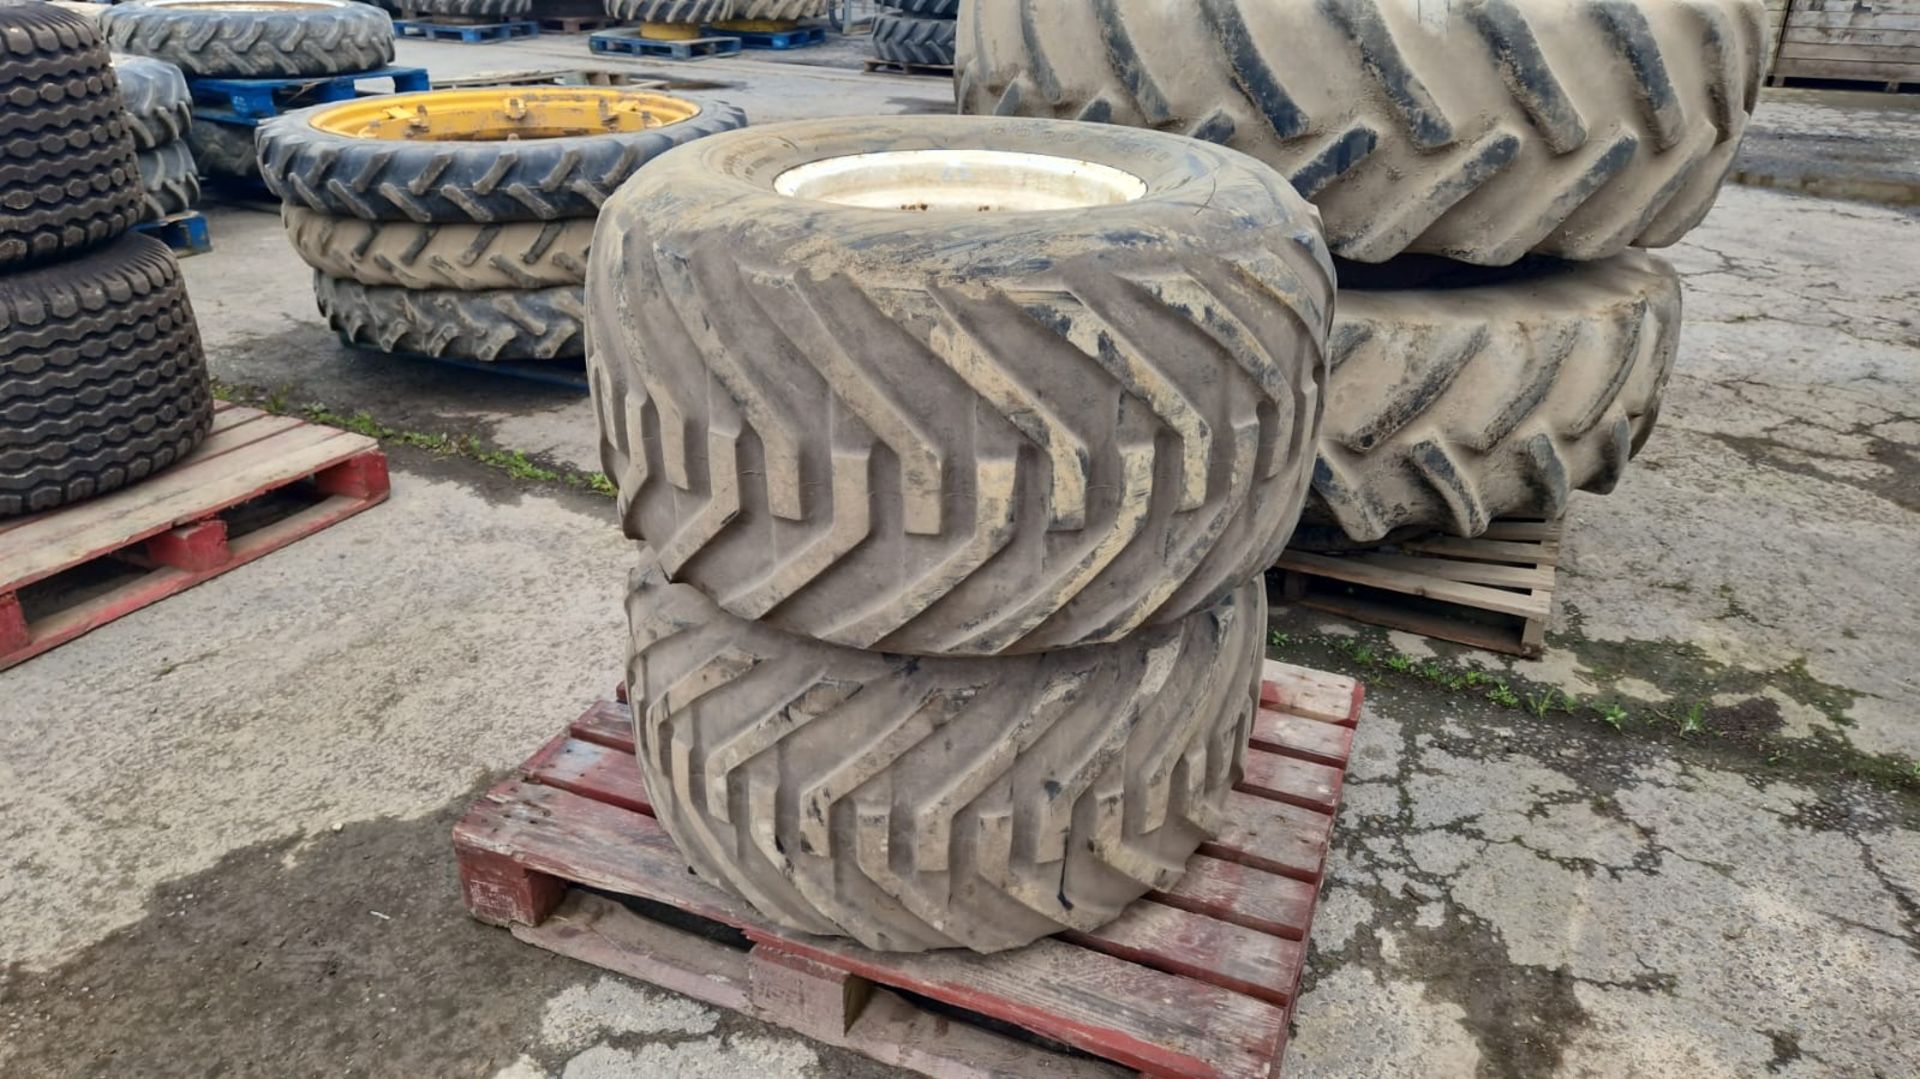 Pair of Terra tyres 38x20.00 fronts 16NHS